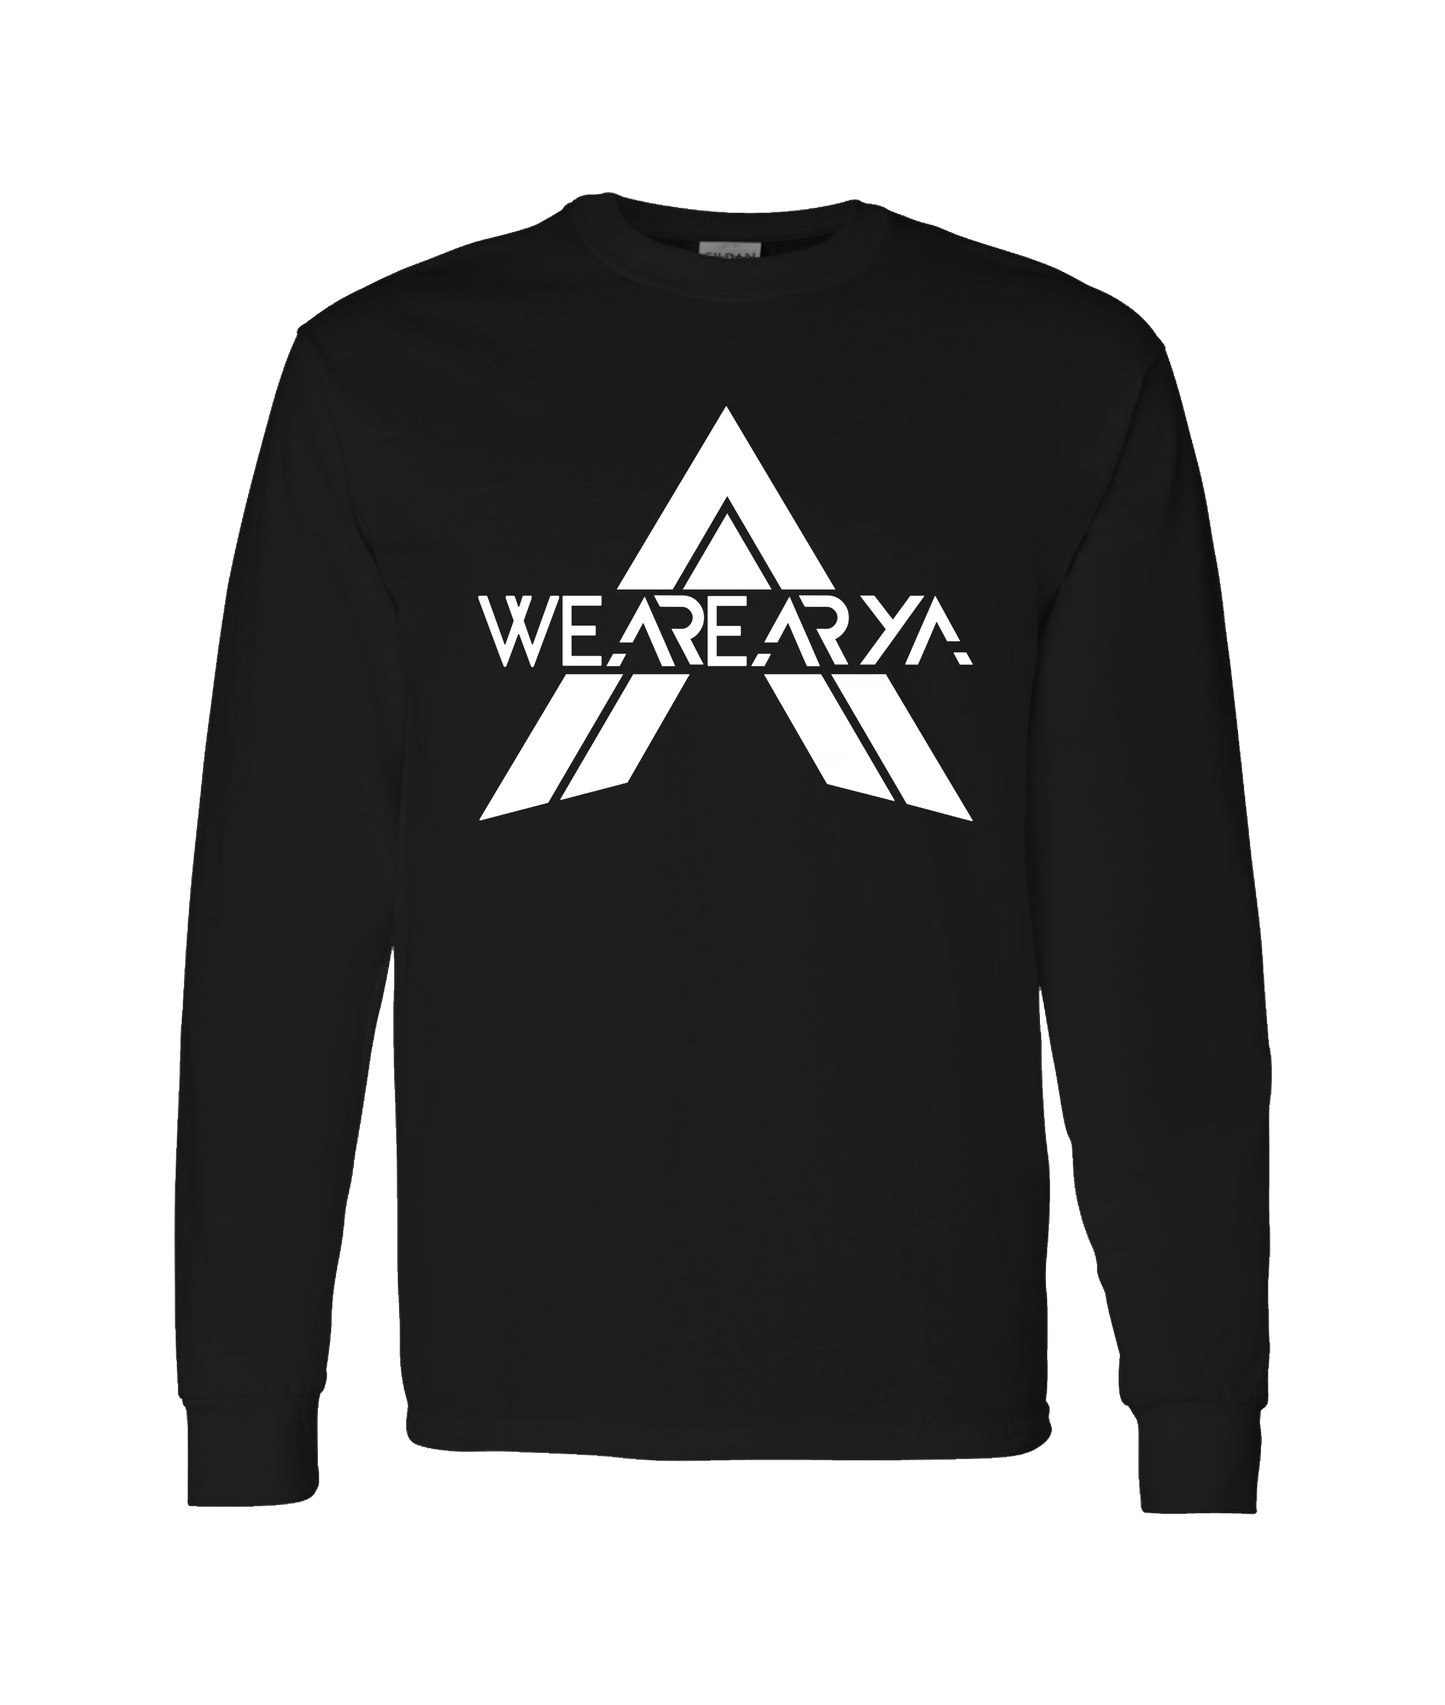 We Are Arya - Emblem - Black Long Sleeve T